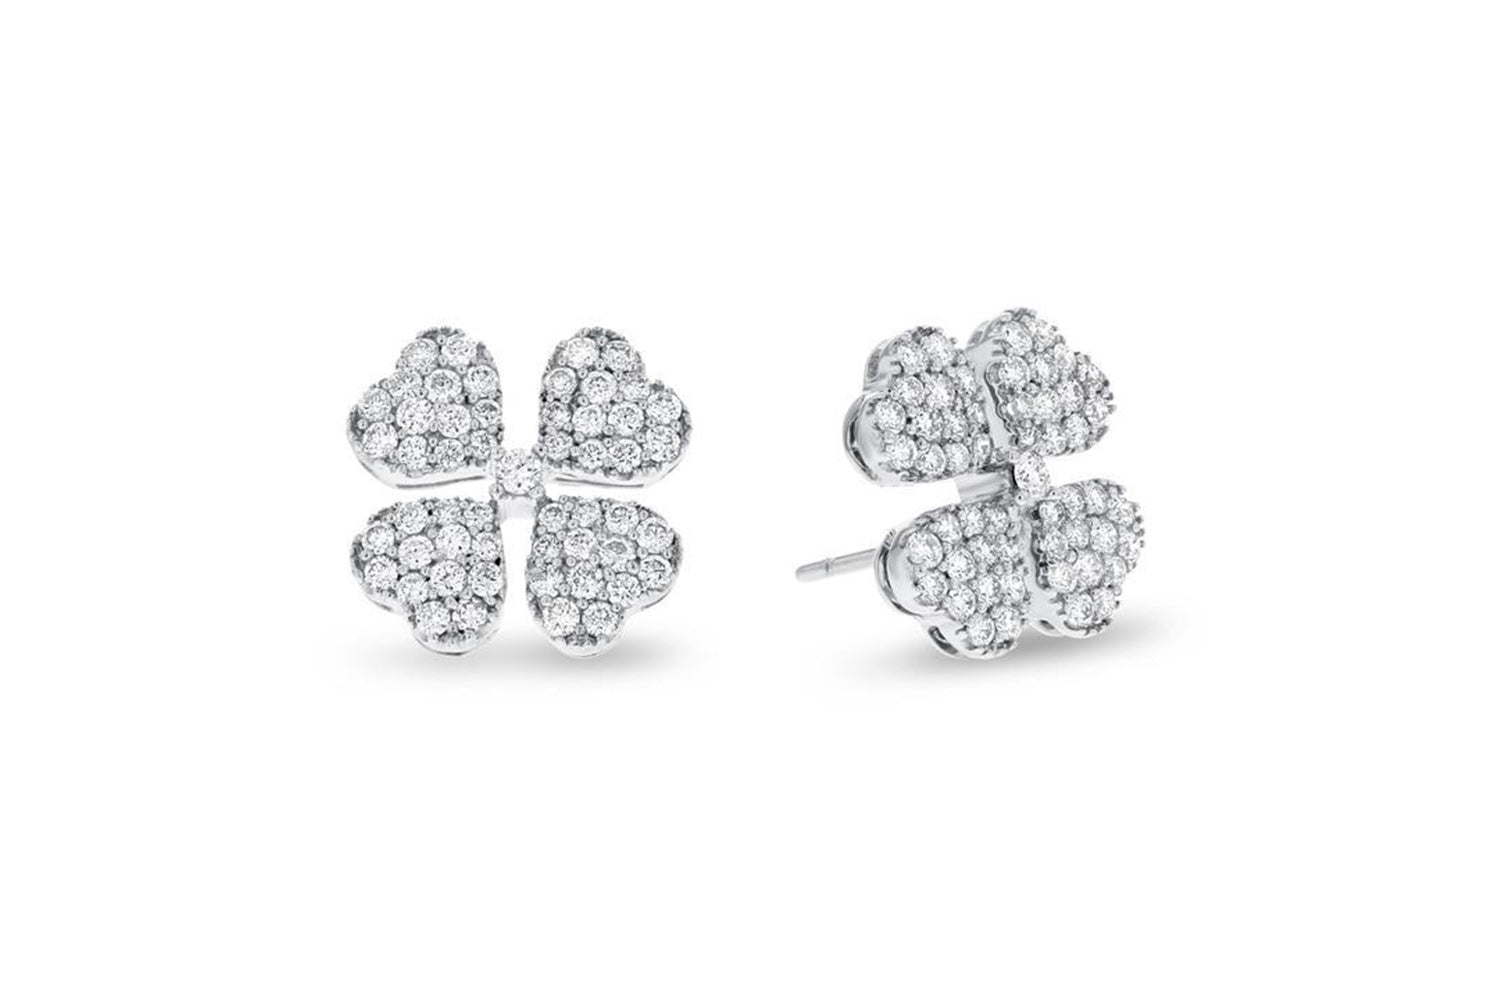 Clover Shaped Diamond Earrings, 18K White Gold 1.04 Carats